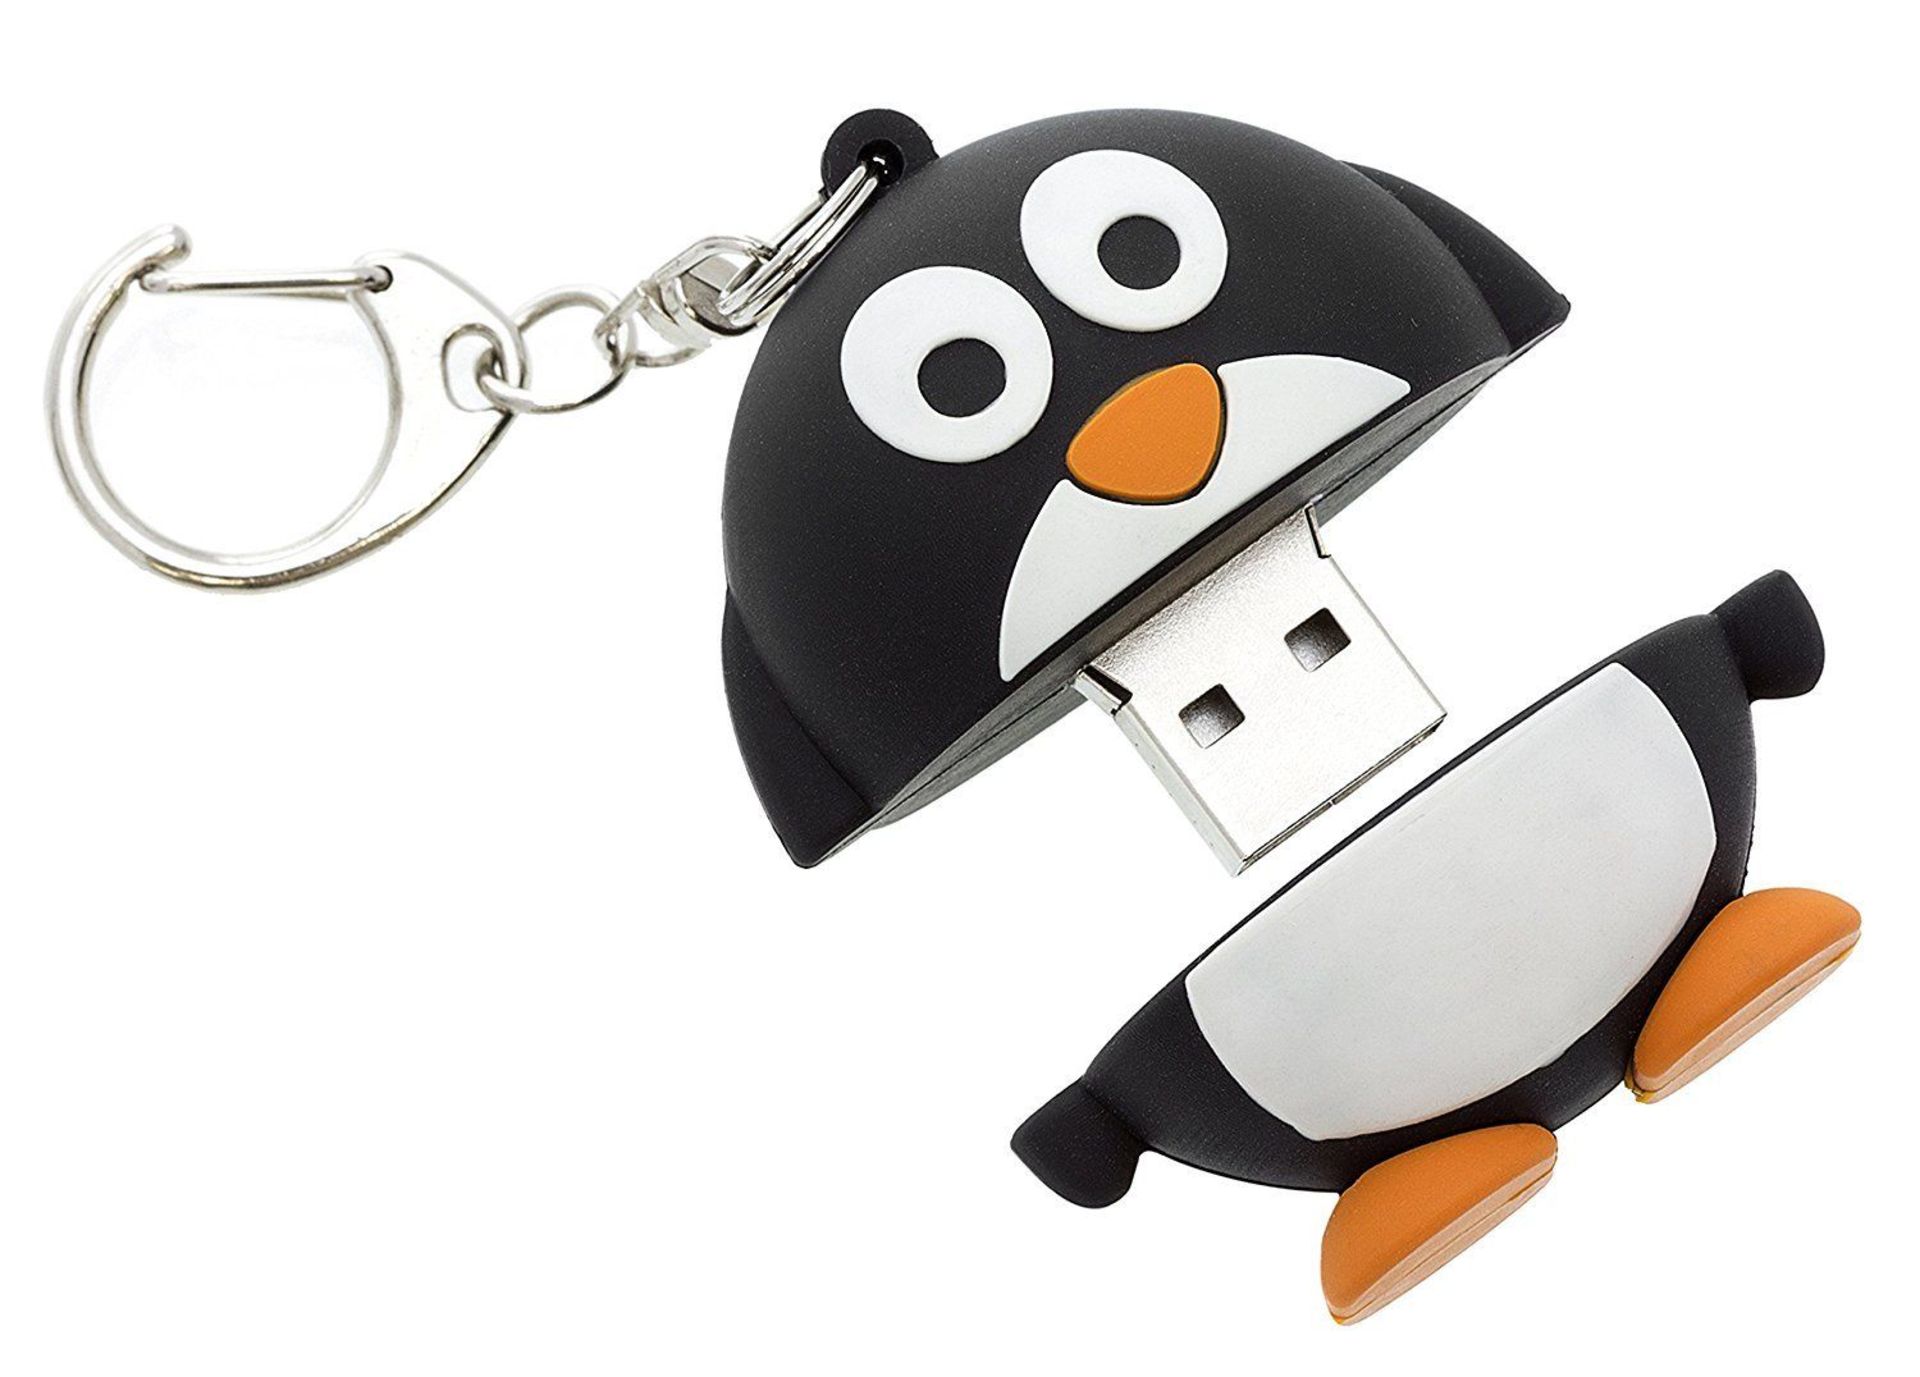 V *TRADE QTY* Brand New My Doodles 8GB Penguin USB Flashdrive - Ebay Price £19.92 X 8 YOUR BID PRICE